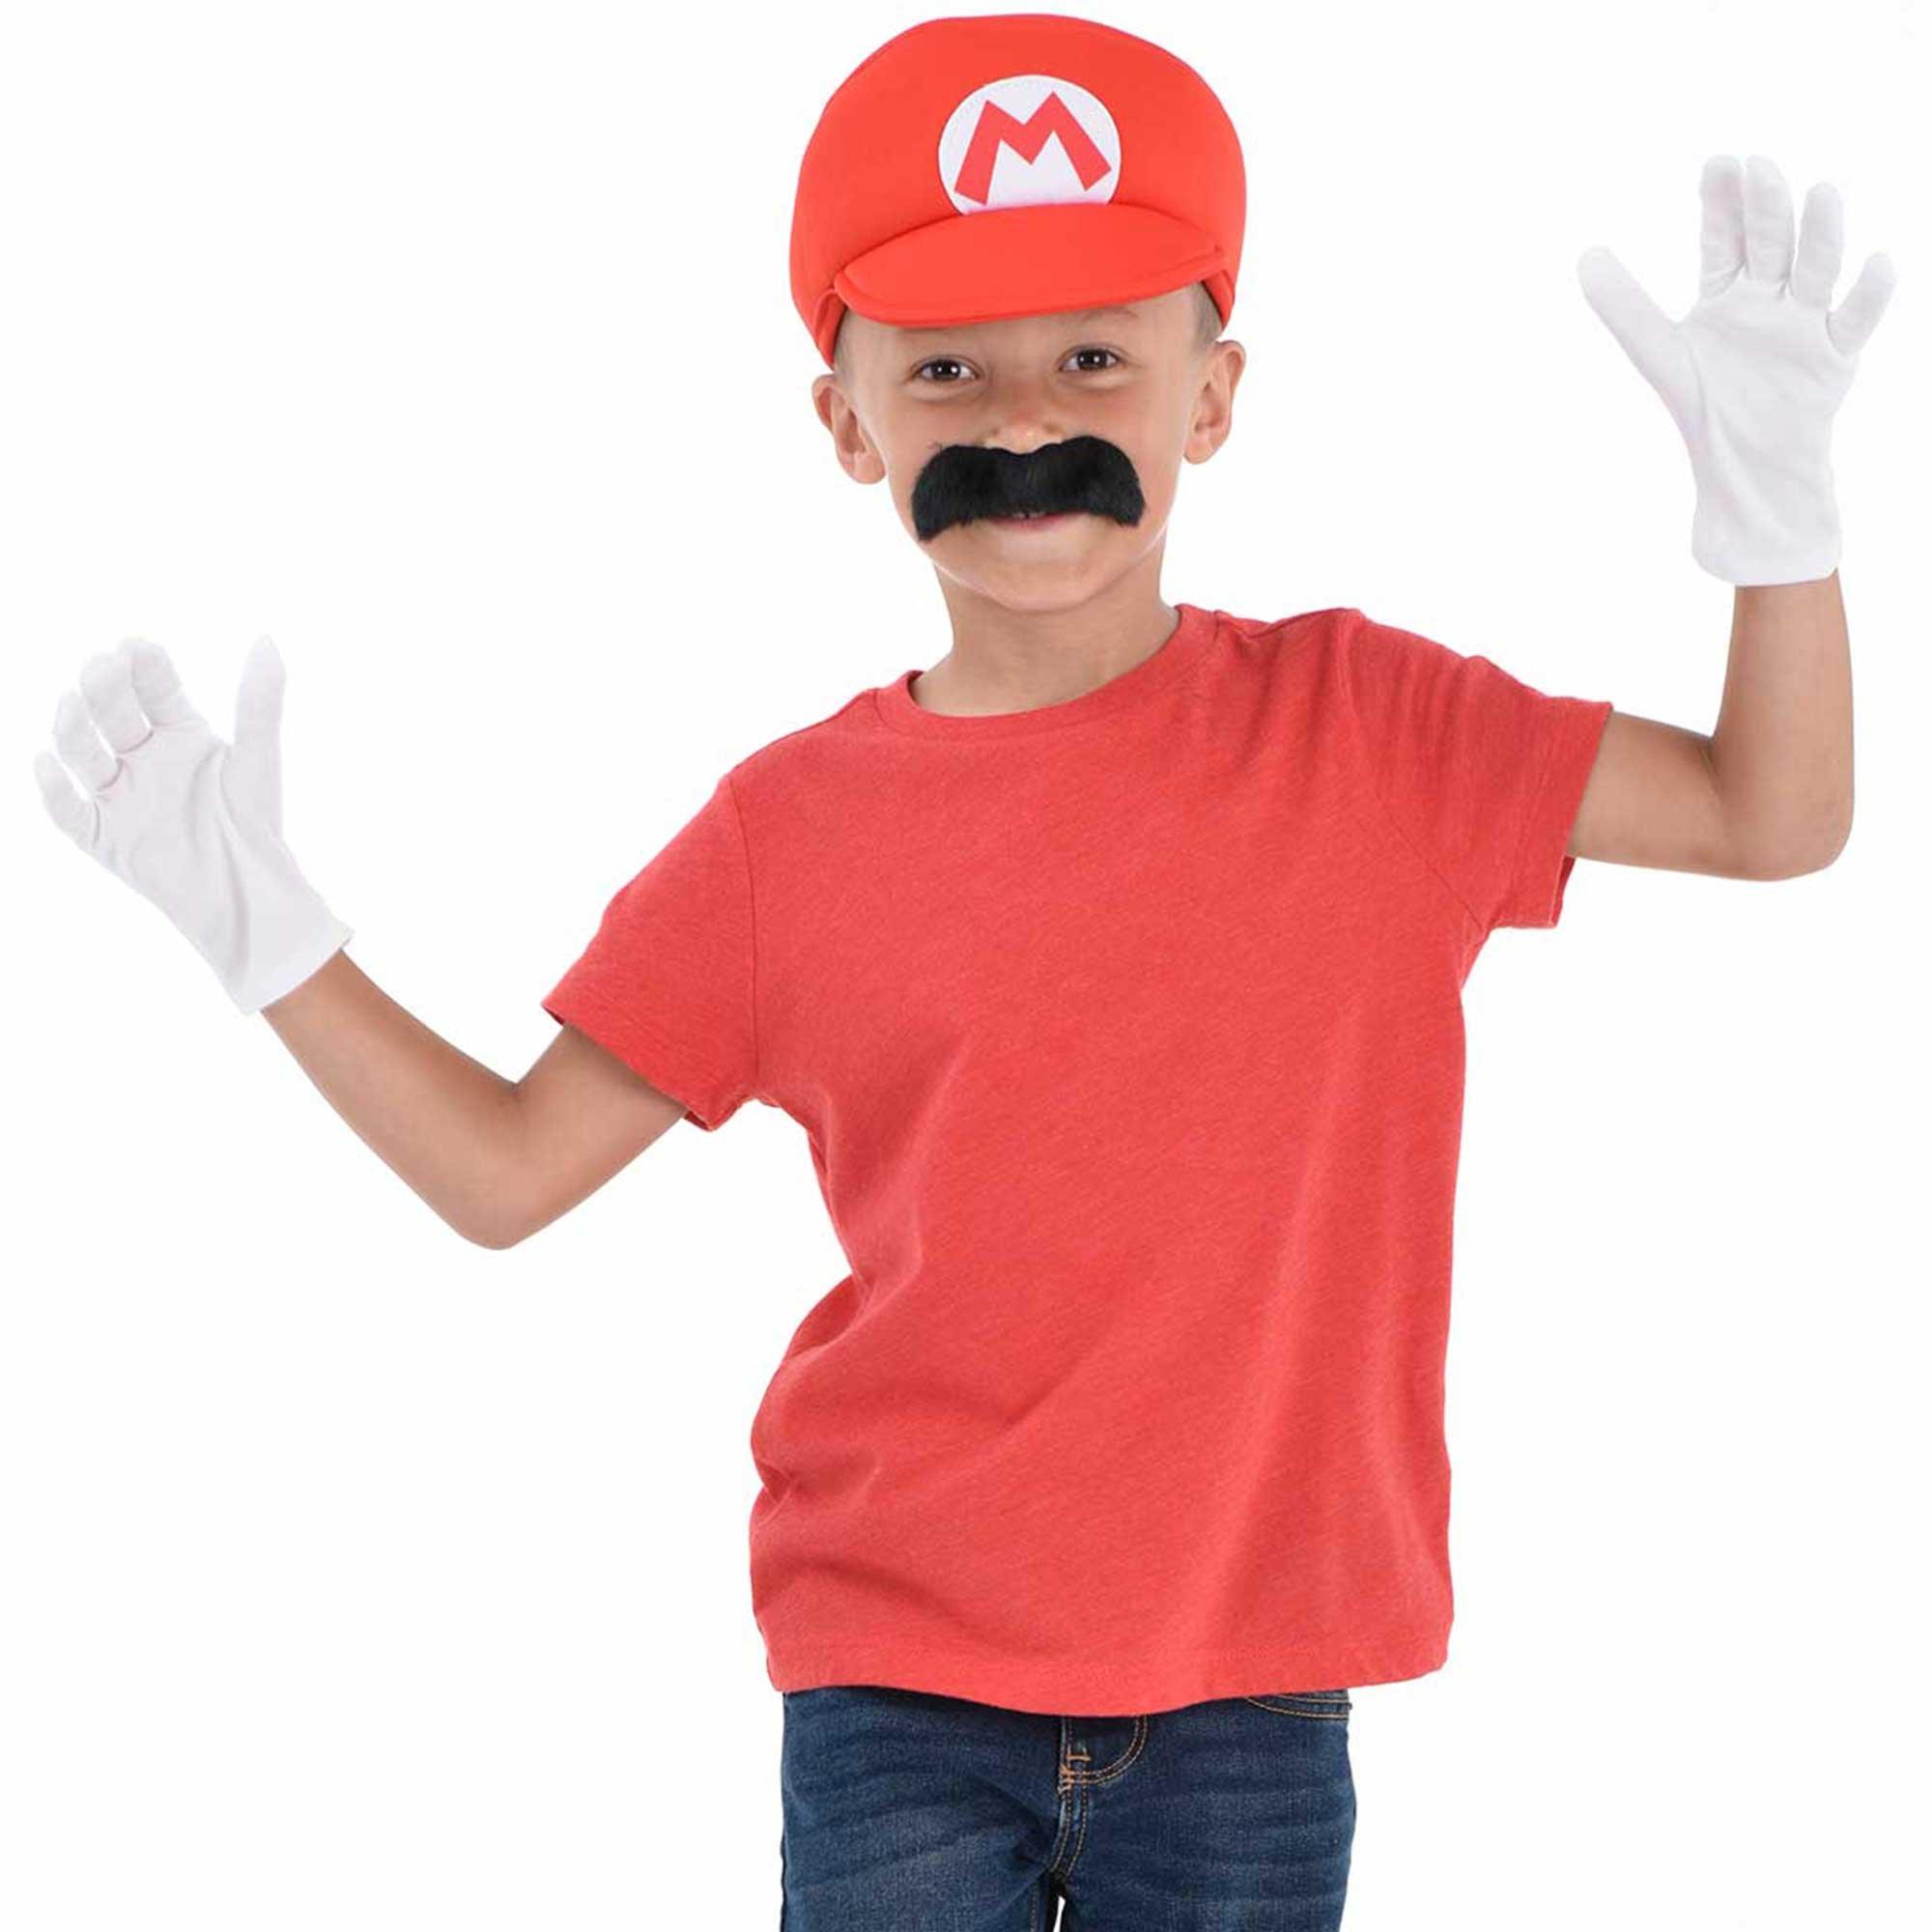 Kids' Super Mario Accessory Kit